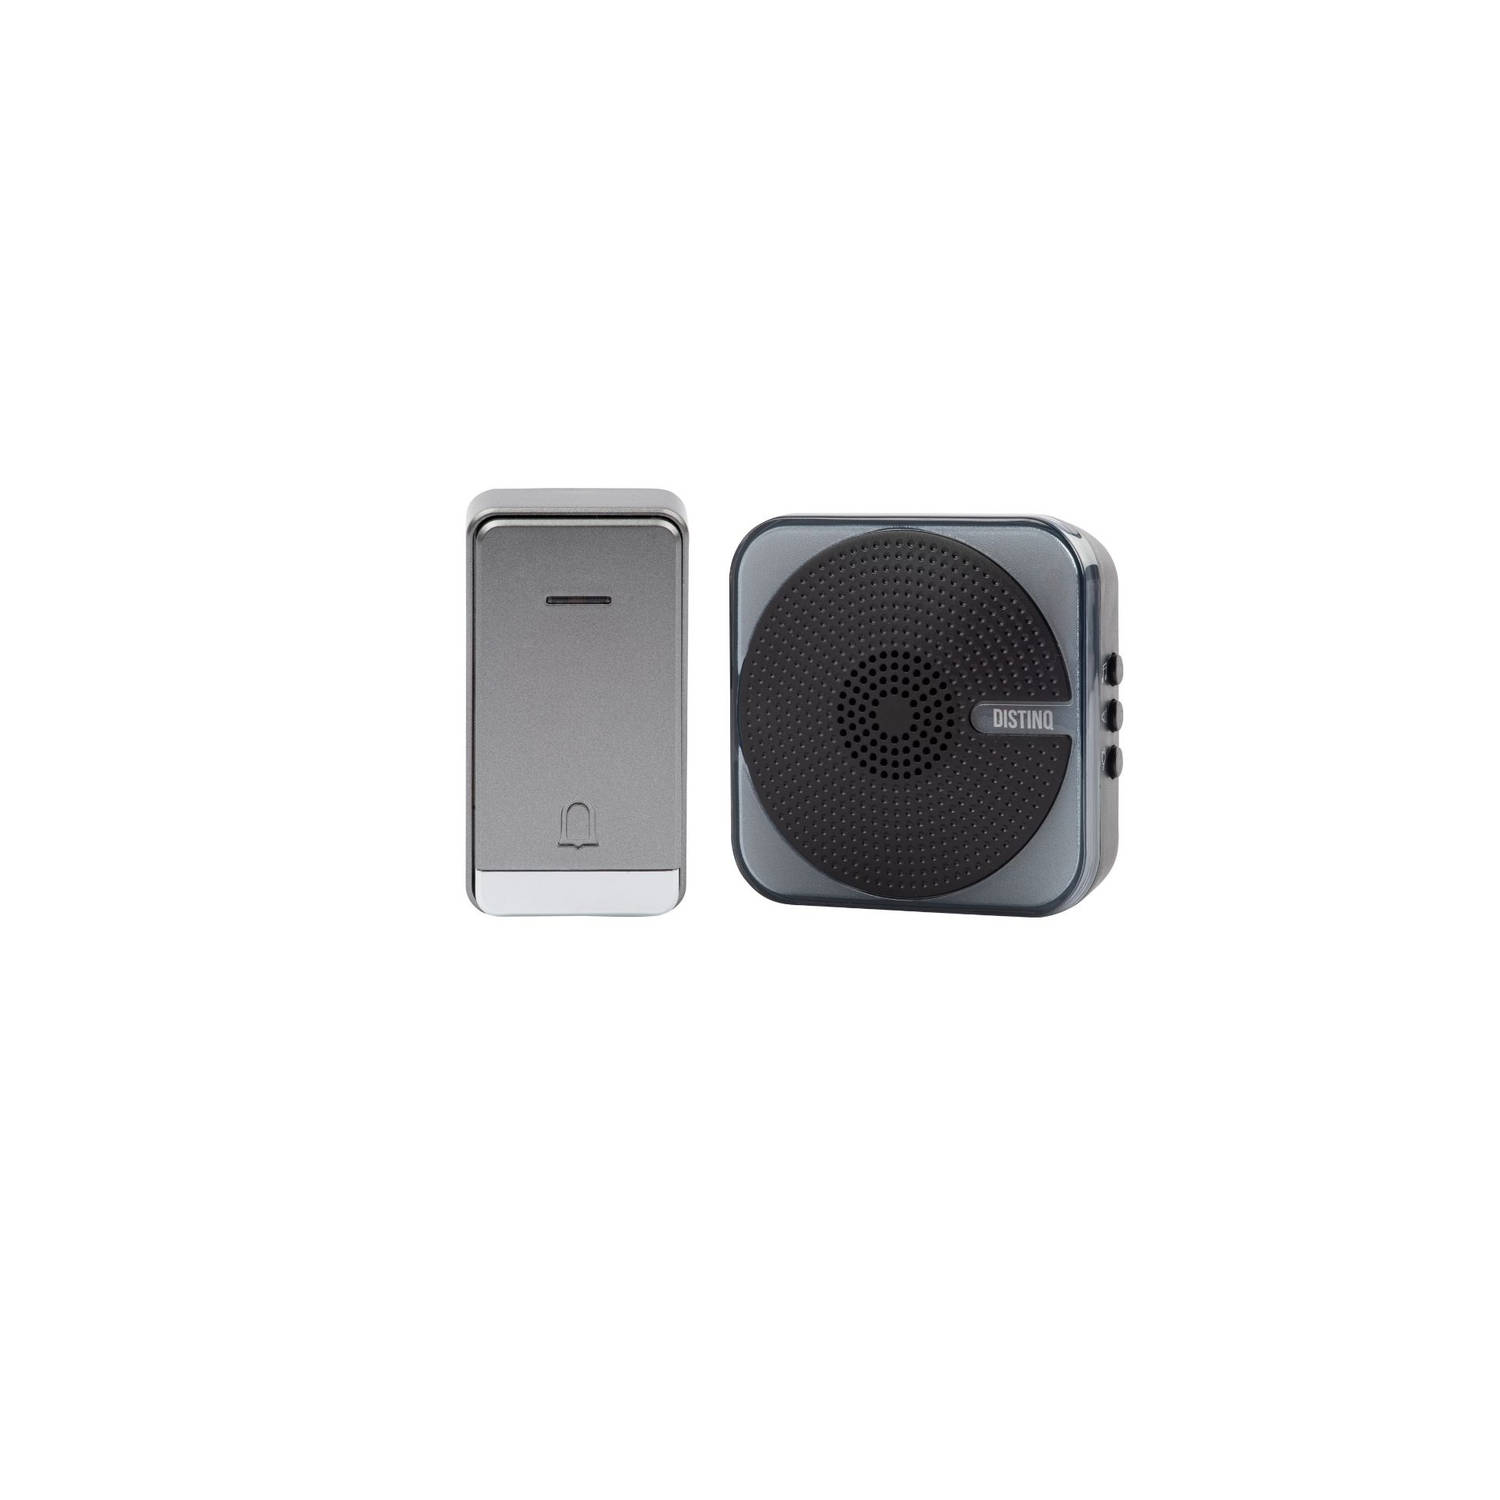 Distinq Draadloze Deurbel 1 Plug & Play Speaker Led Verlichting Voor Visuele Ondersteuning